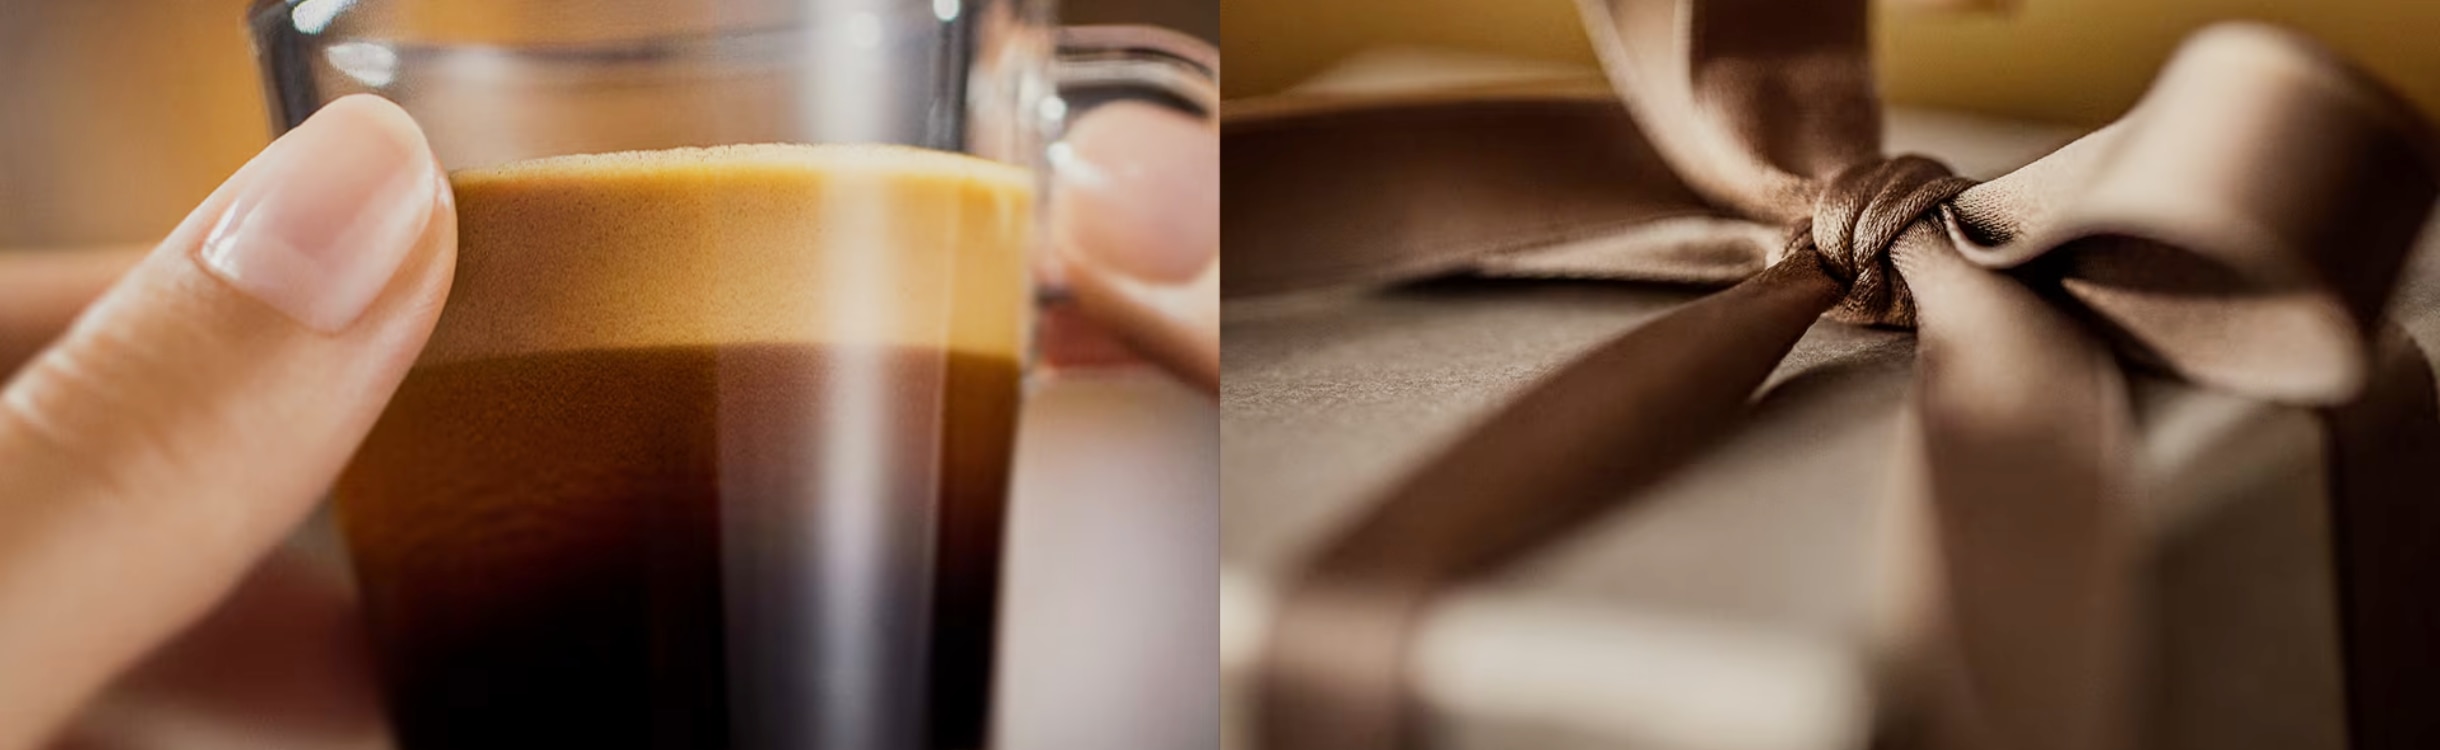 Advantages and benefits Nespresso